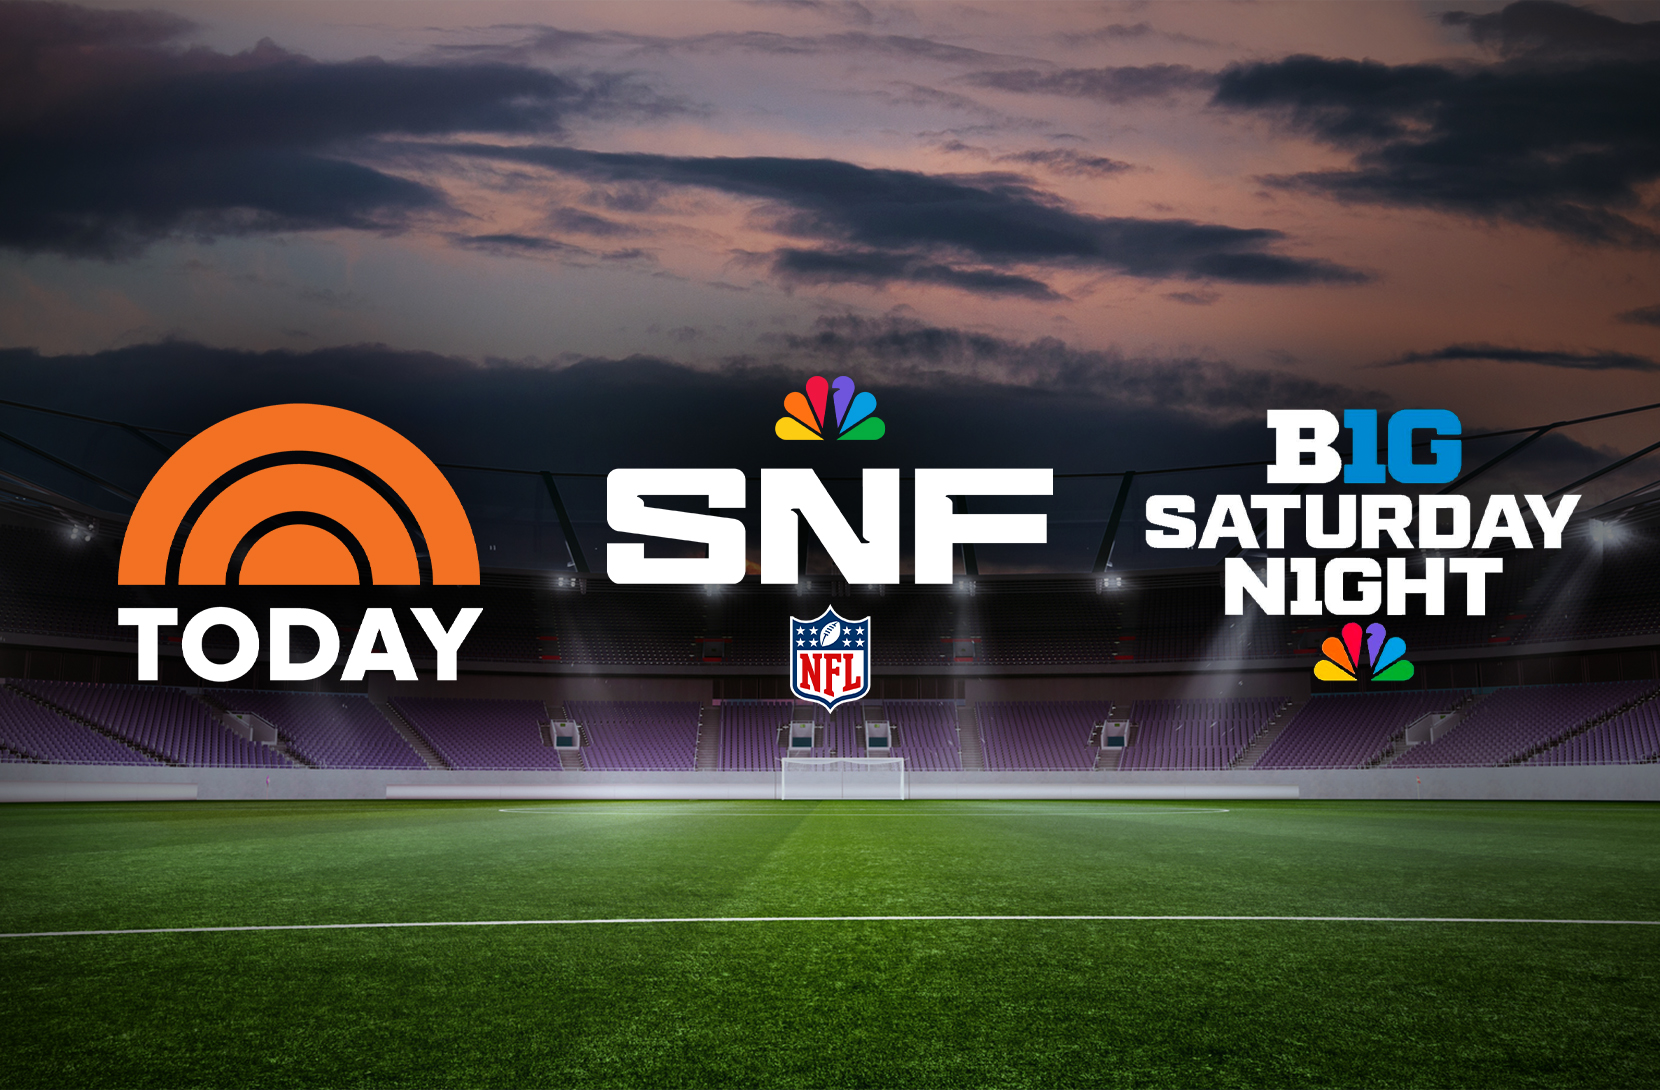 Sunday Night Football on NBC - Kicking off the #NFL season with